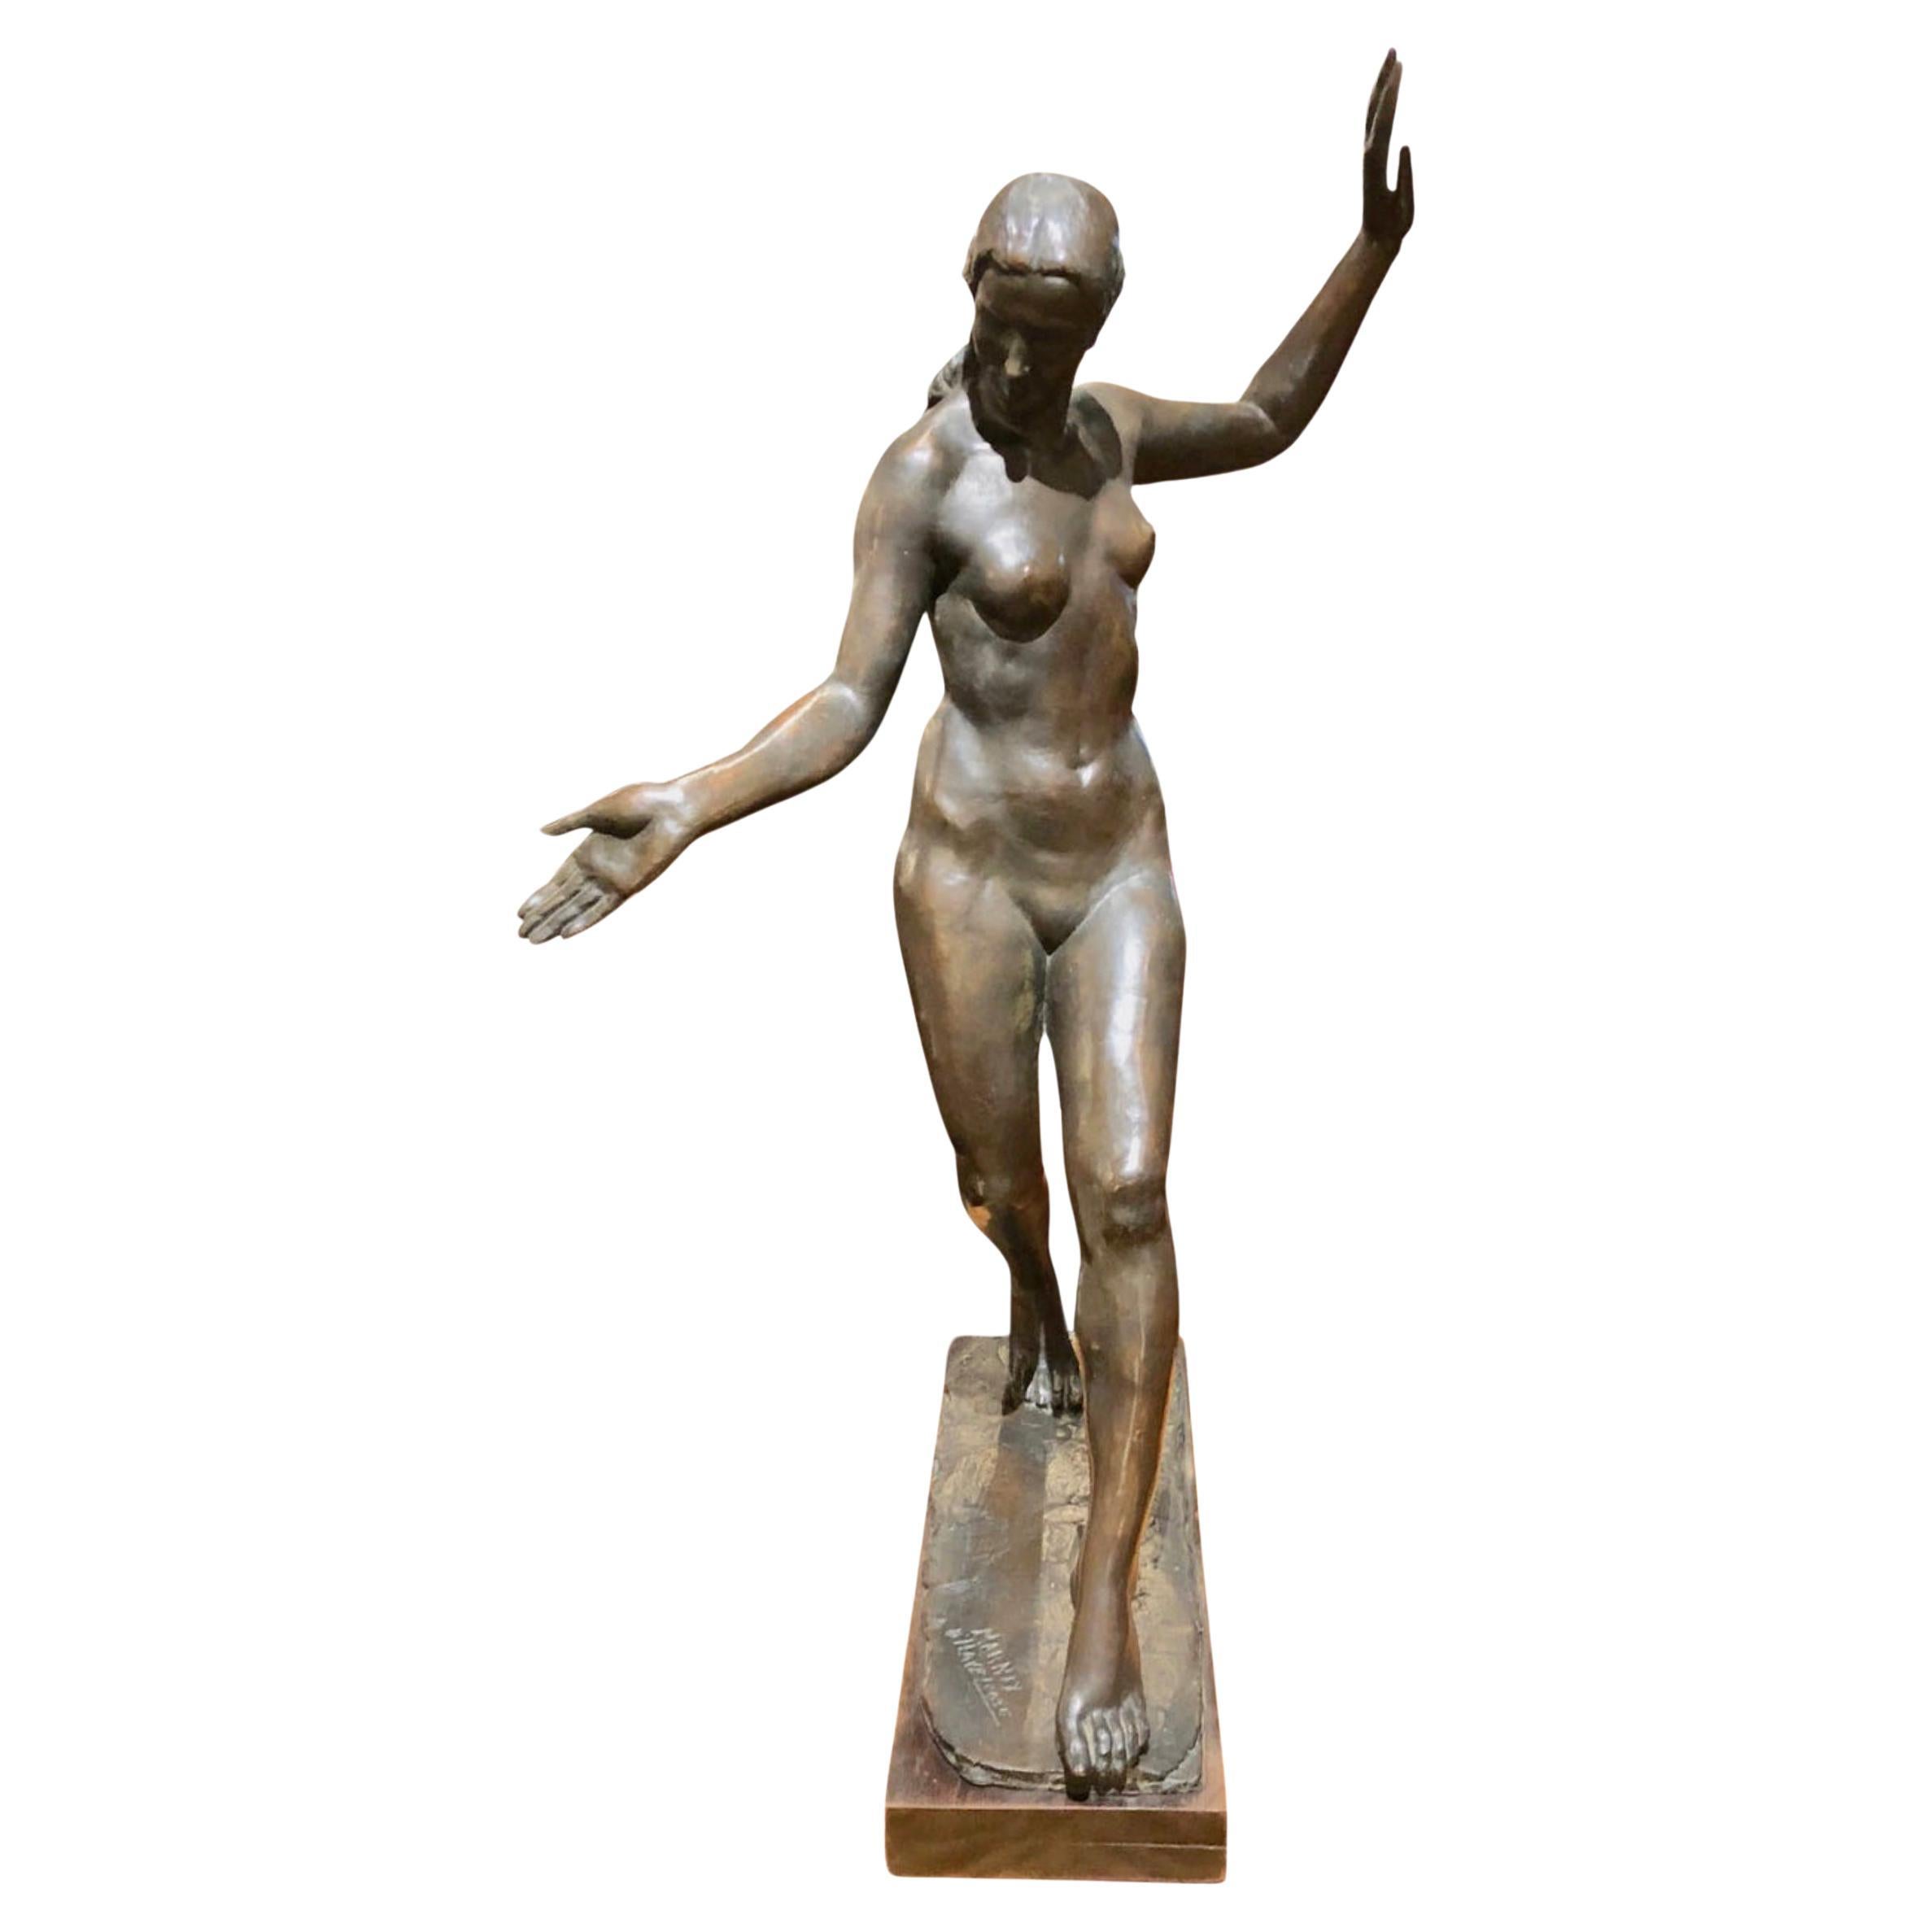 Klassische weibliche Art Deco Bronzestatue des belgischen Künstlers M. D'haveloose